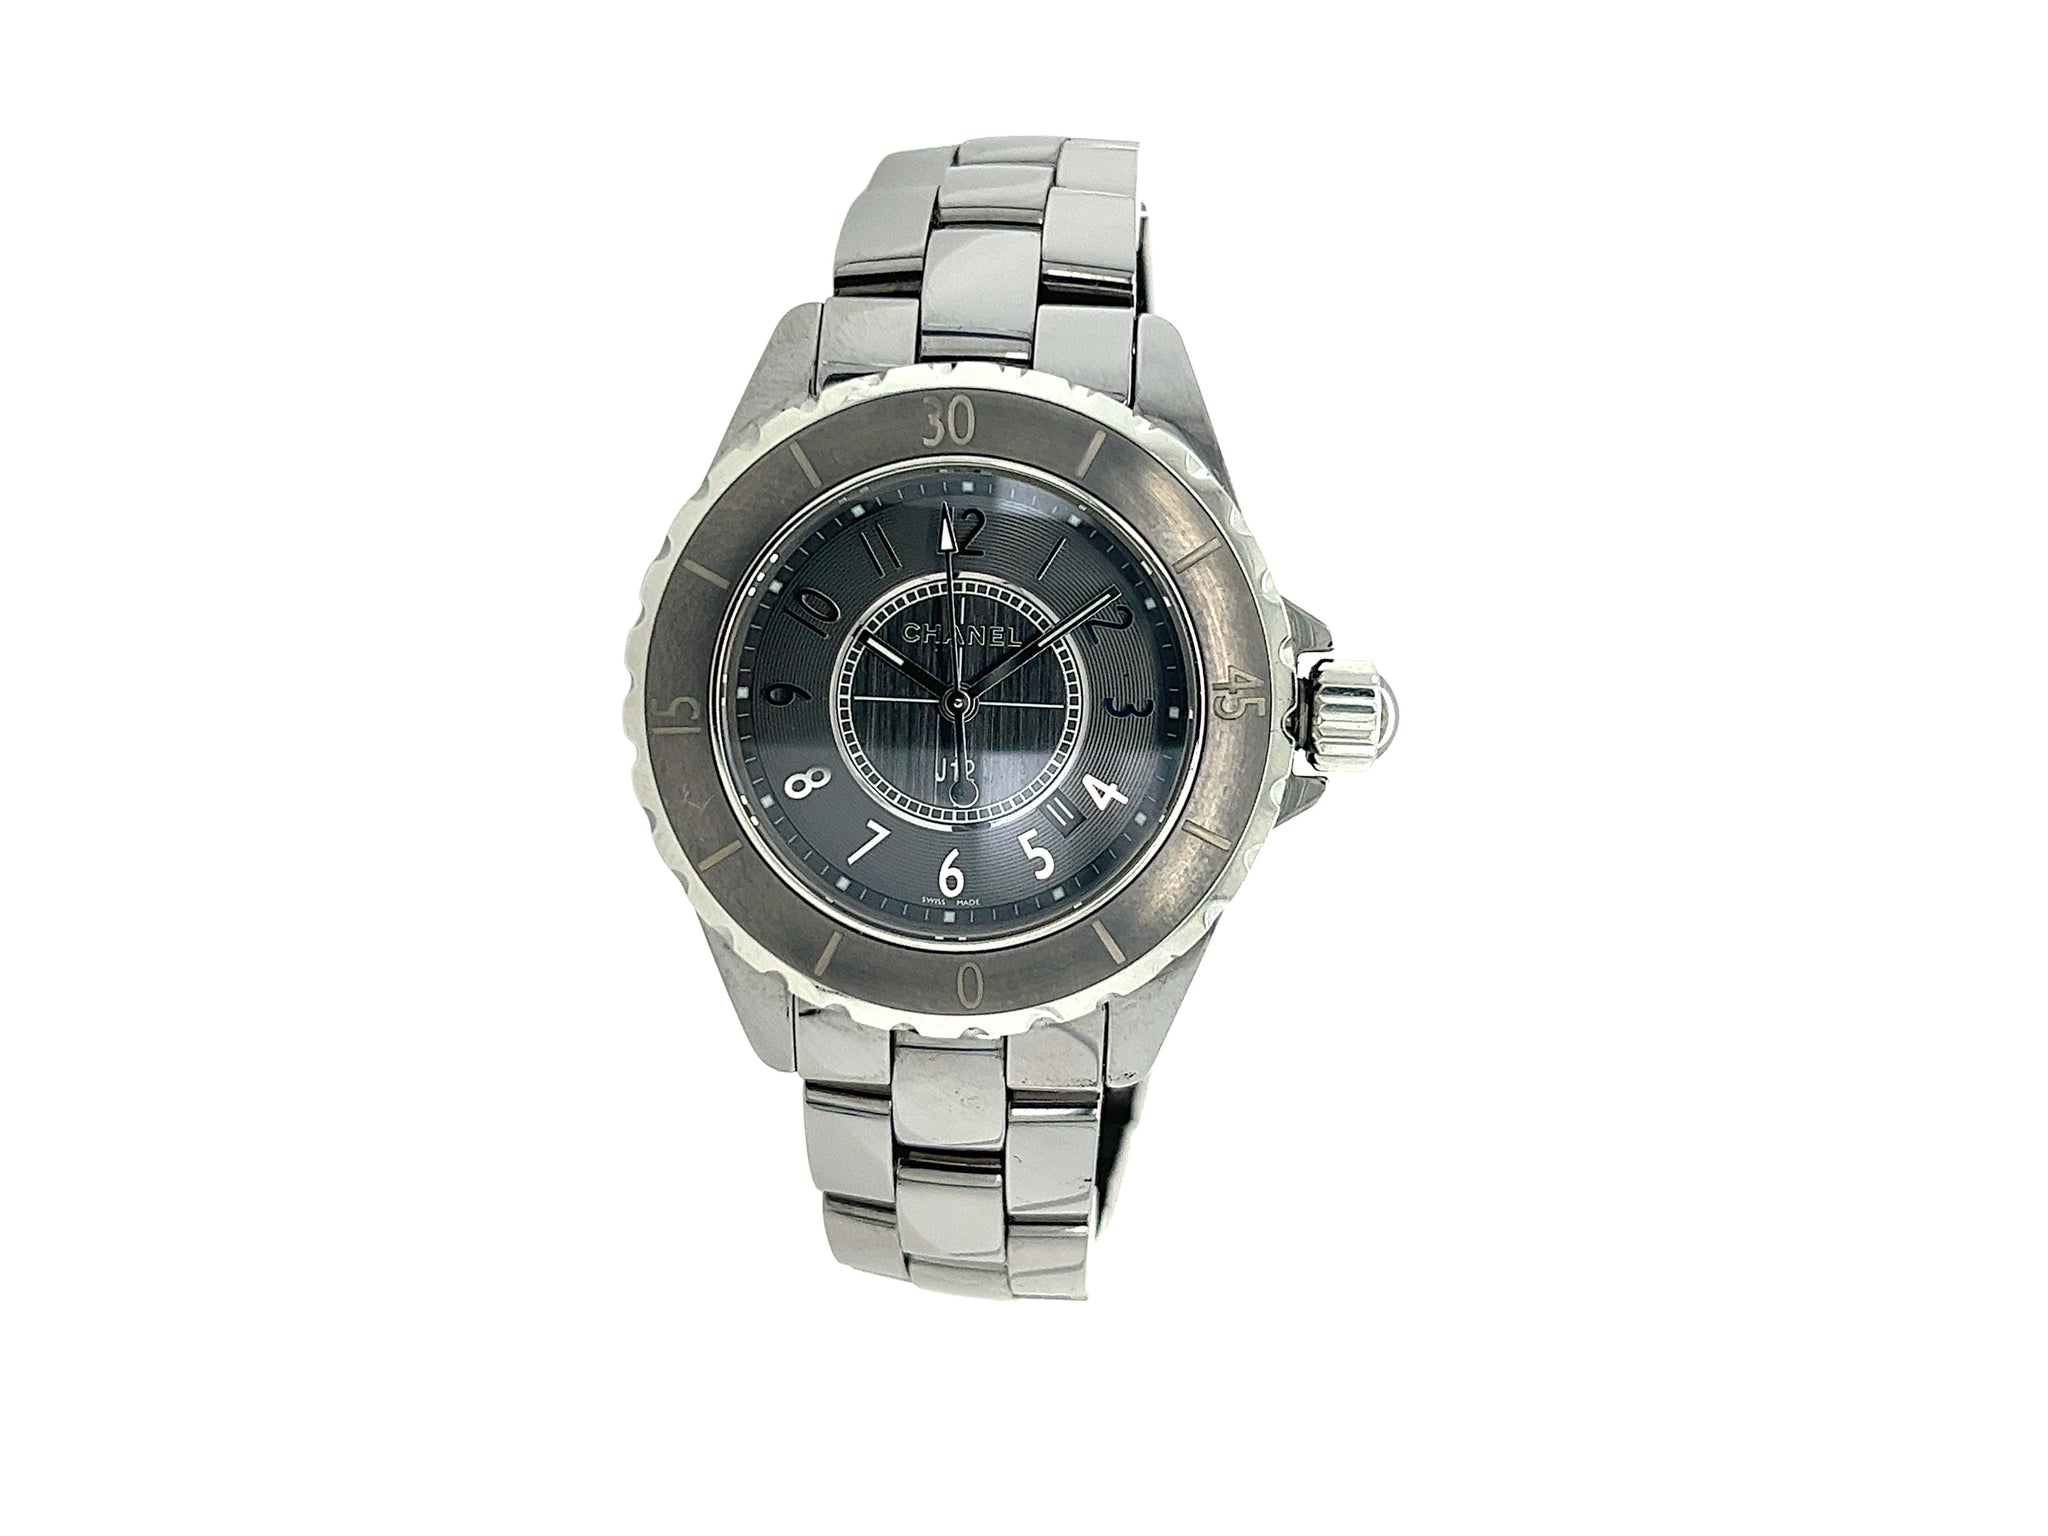 Chanel J12 Ceramic Diamond Lady's Watch - Watch Rapport